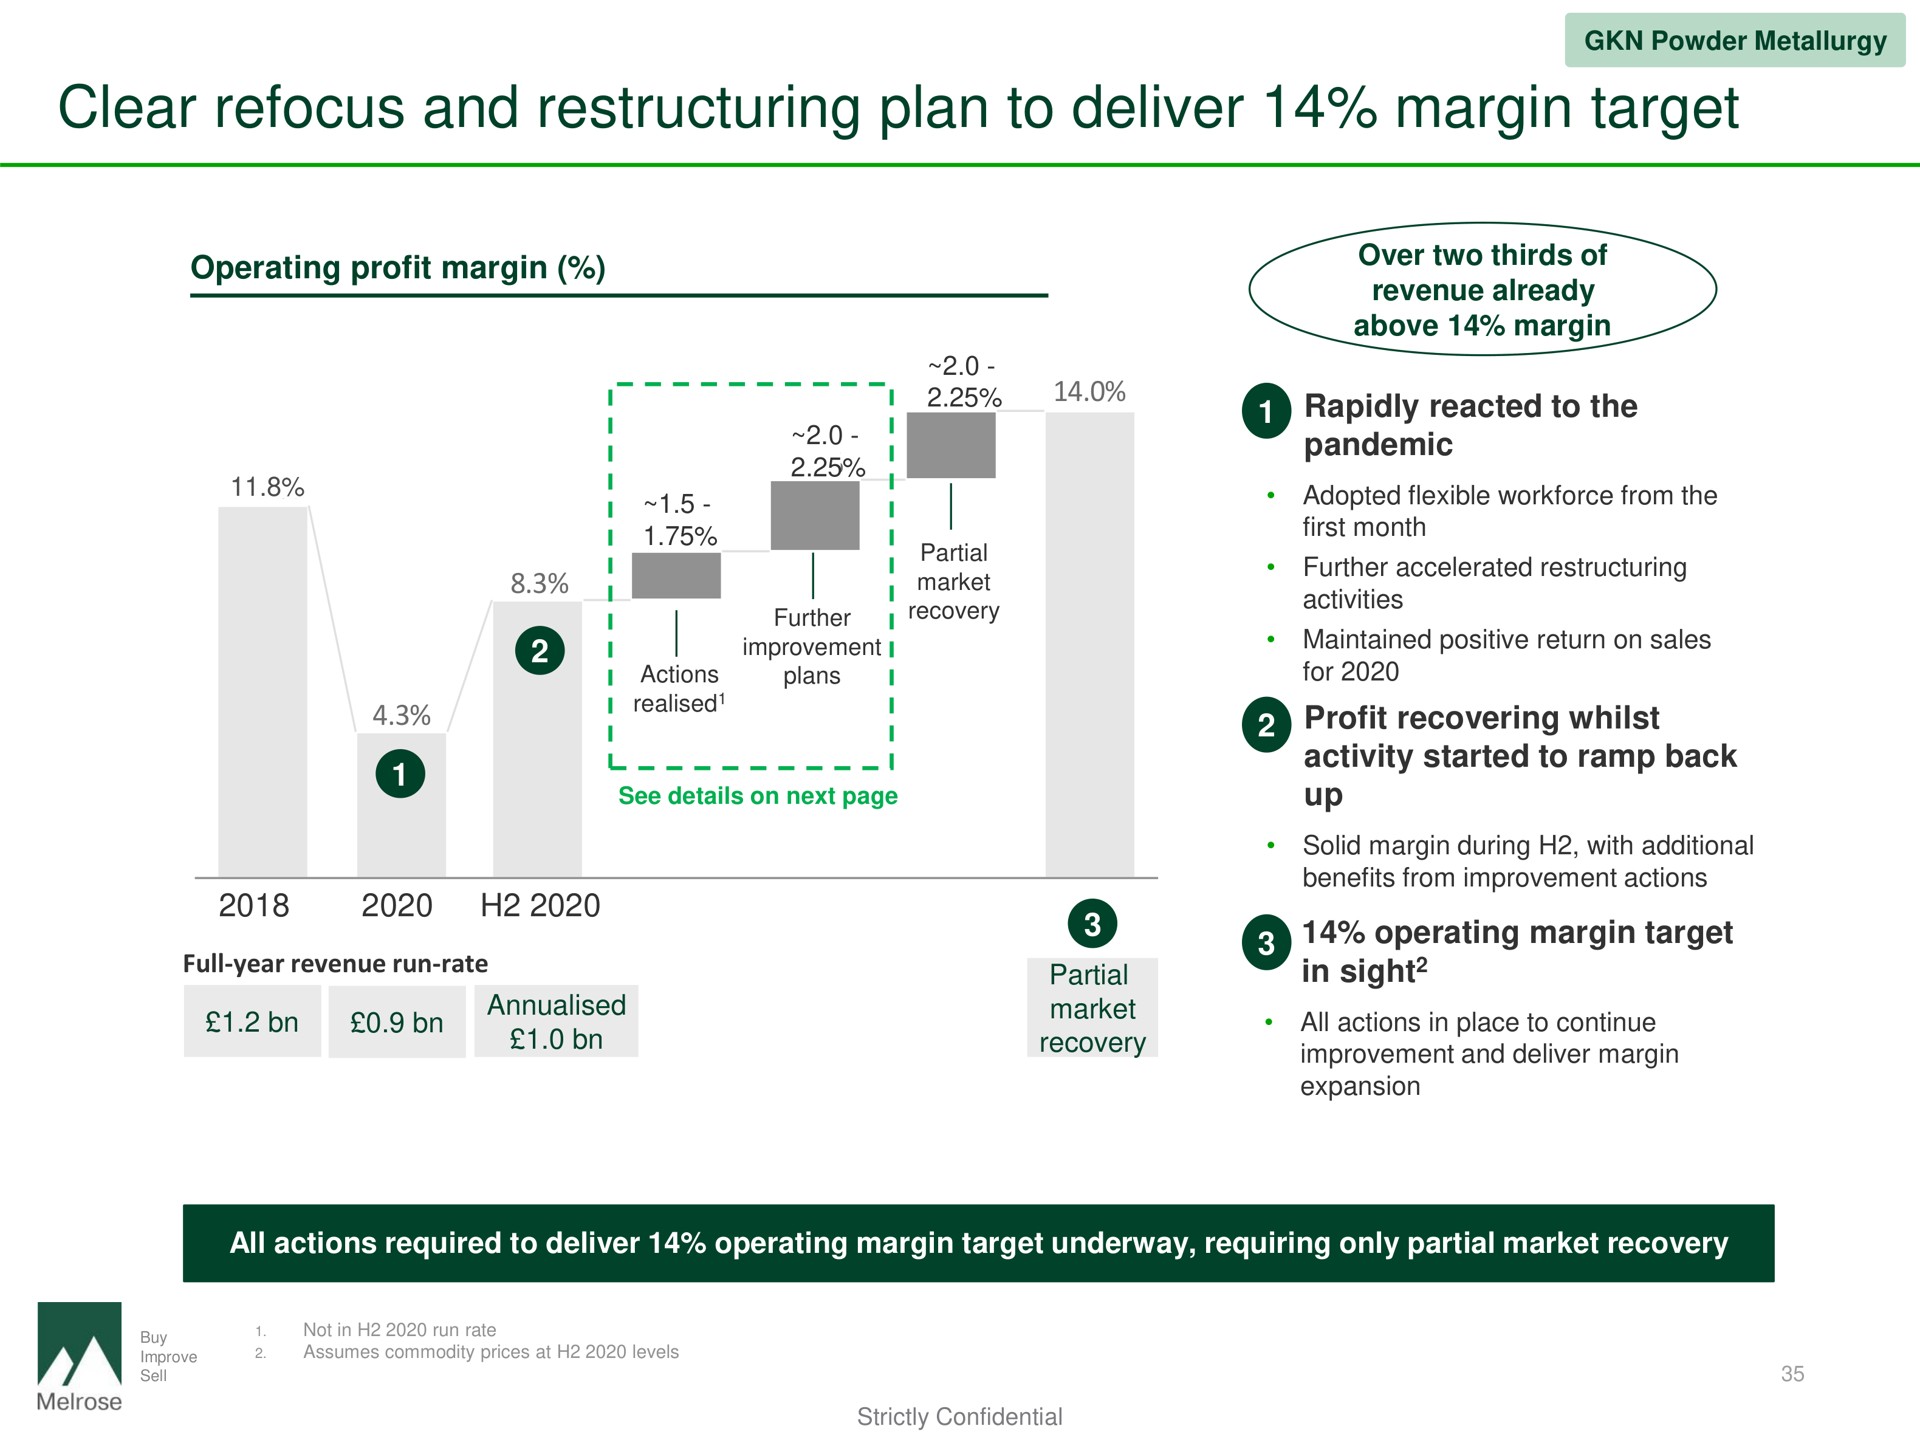 clear refocus and plan to deliver margin target | Melrose